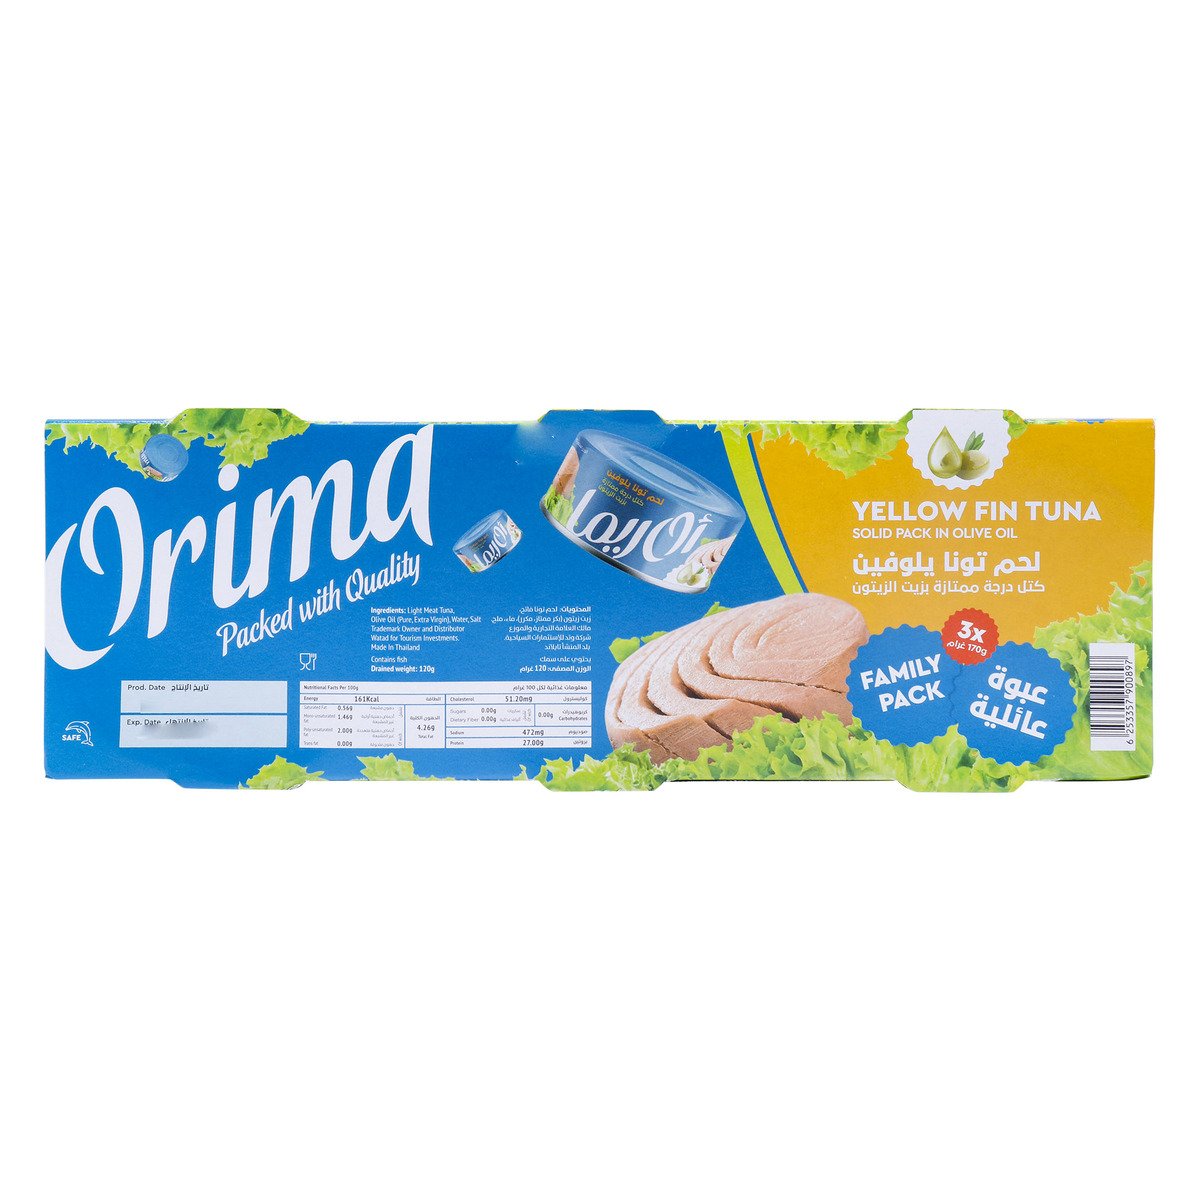 Orima Yellow Fin Tuna Solid Pack in Olive Oil 3 x 170g